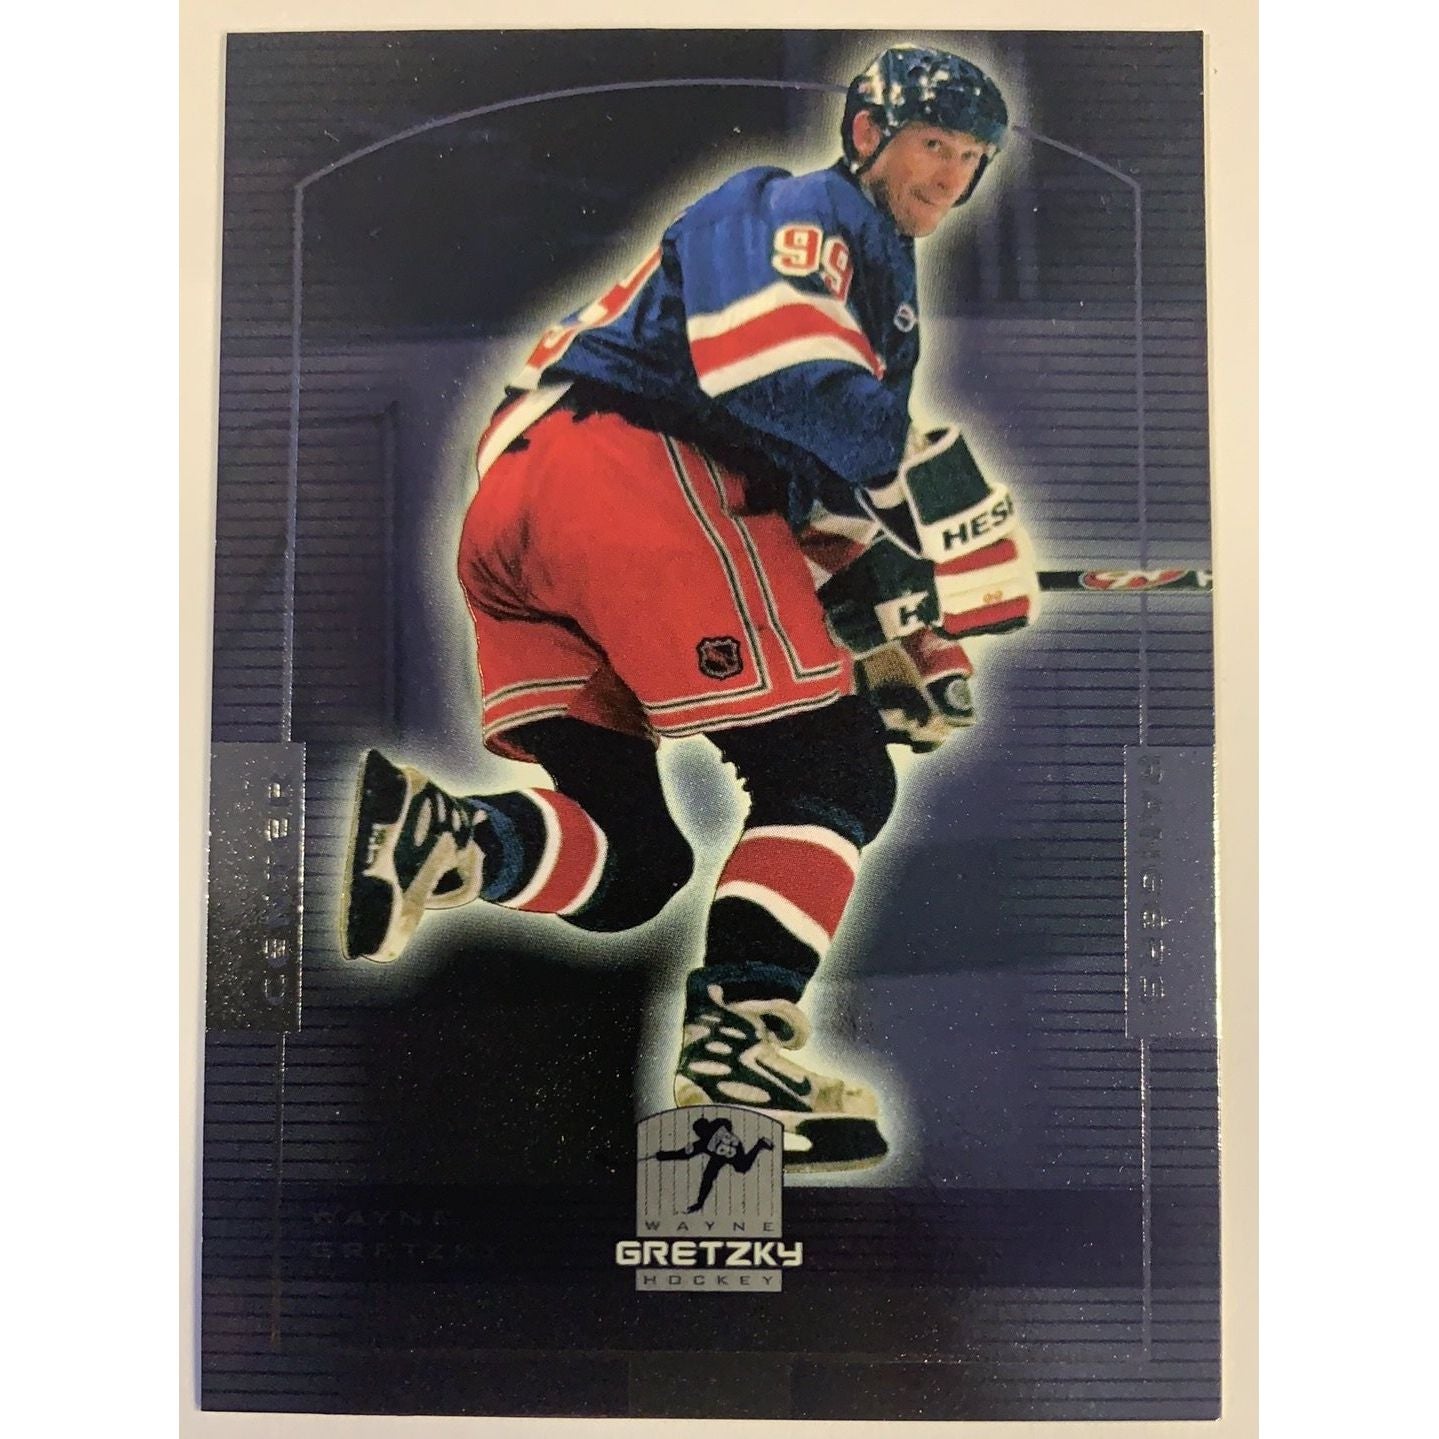  2000 Upper Deck Hall of Fame Career Wayne Gretzky HOF 29  Local Legends Cards & Collectibles